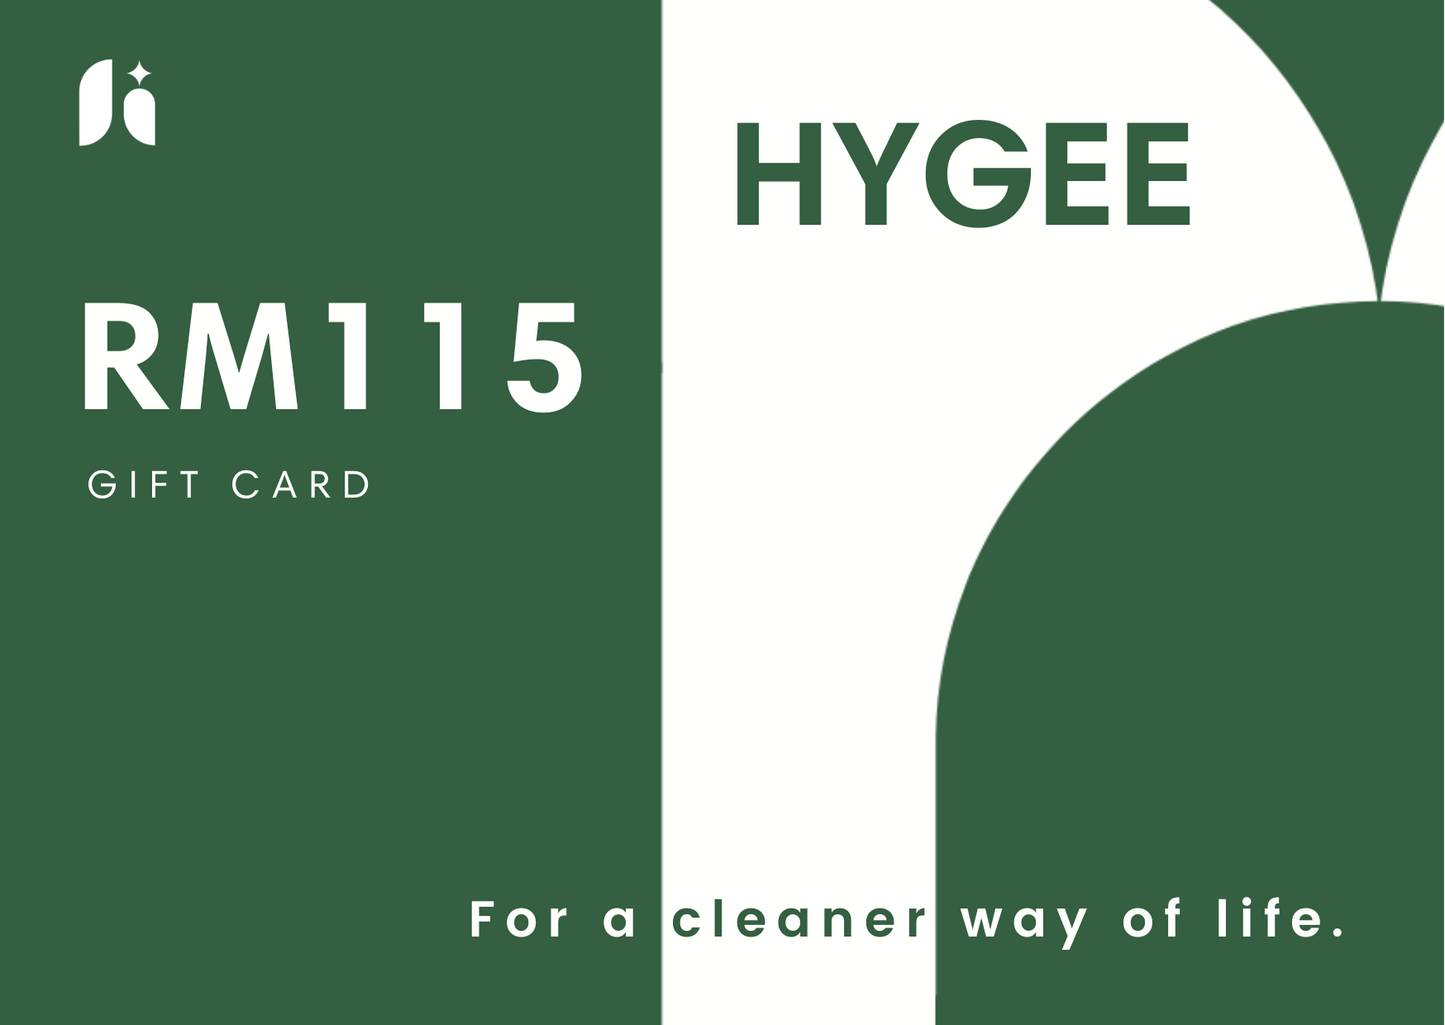 HYGEE Gift Card